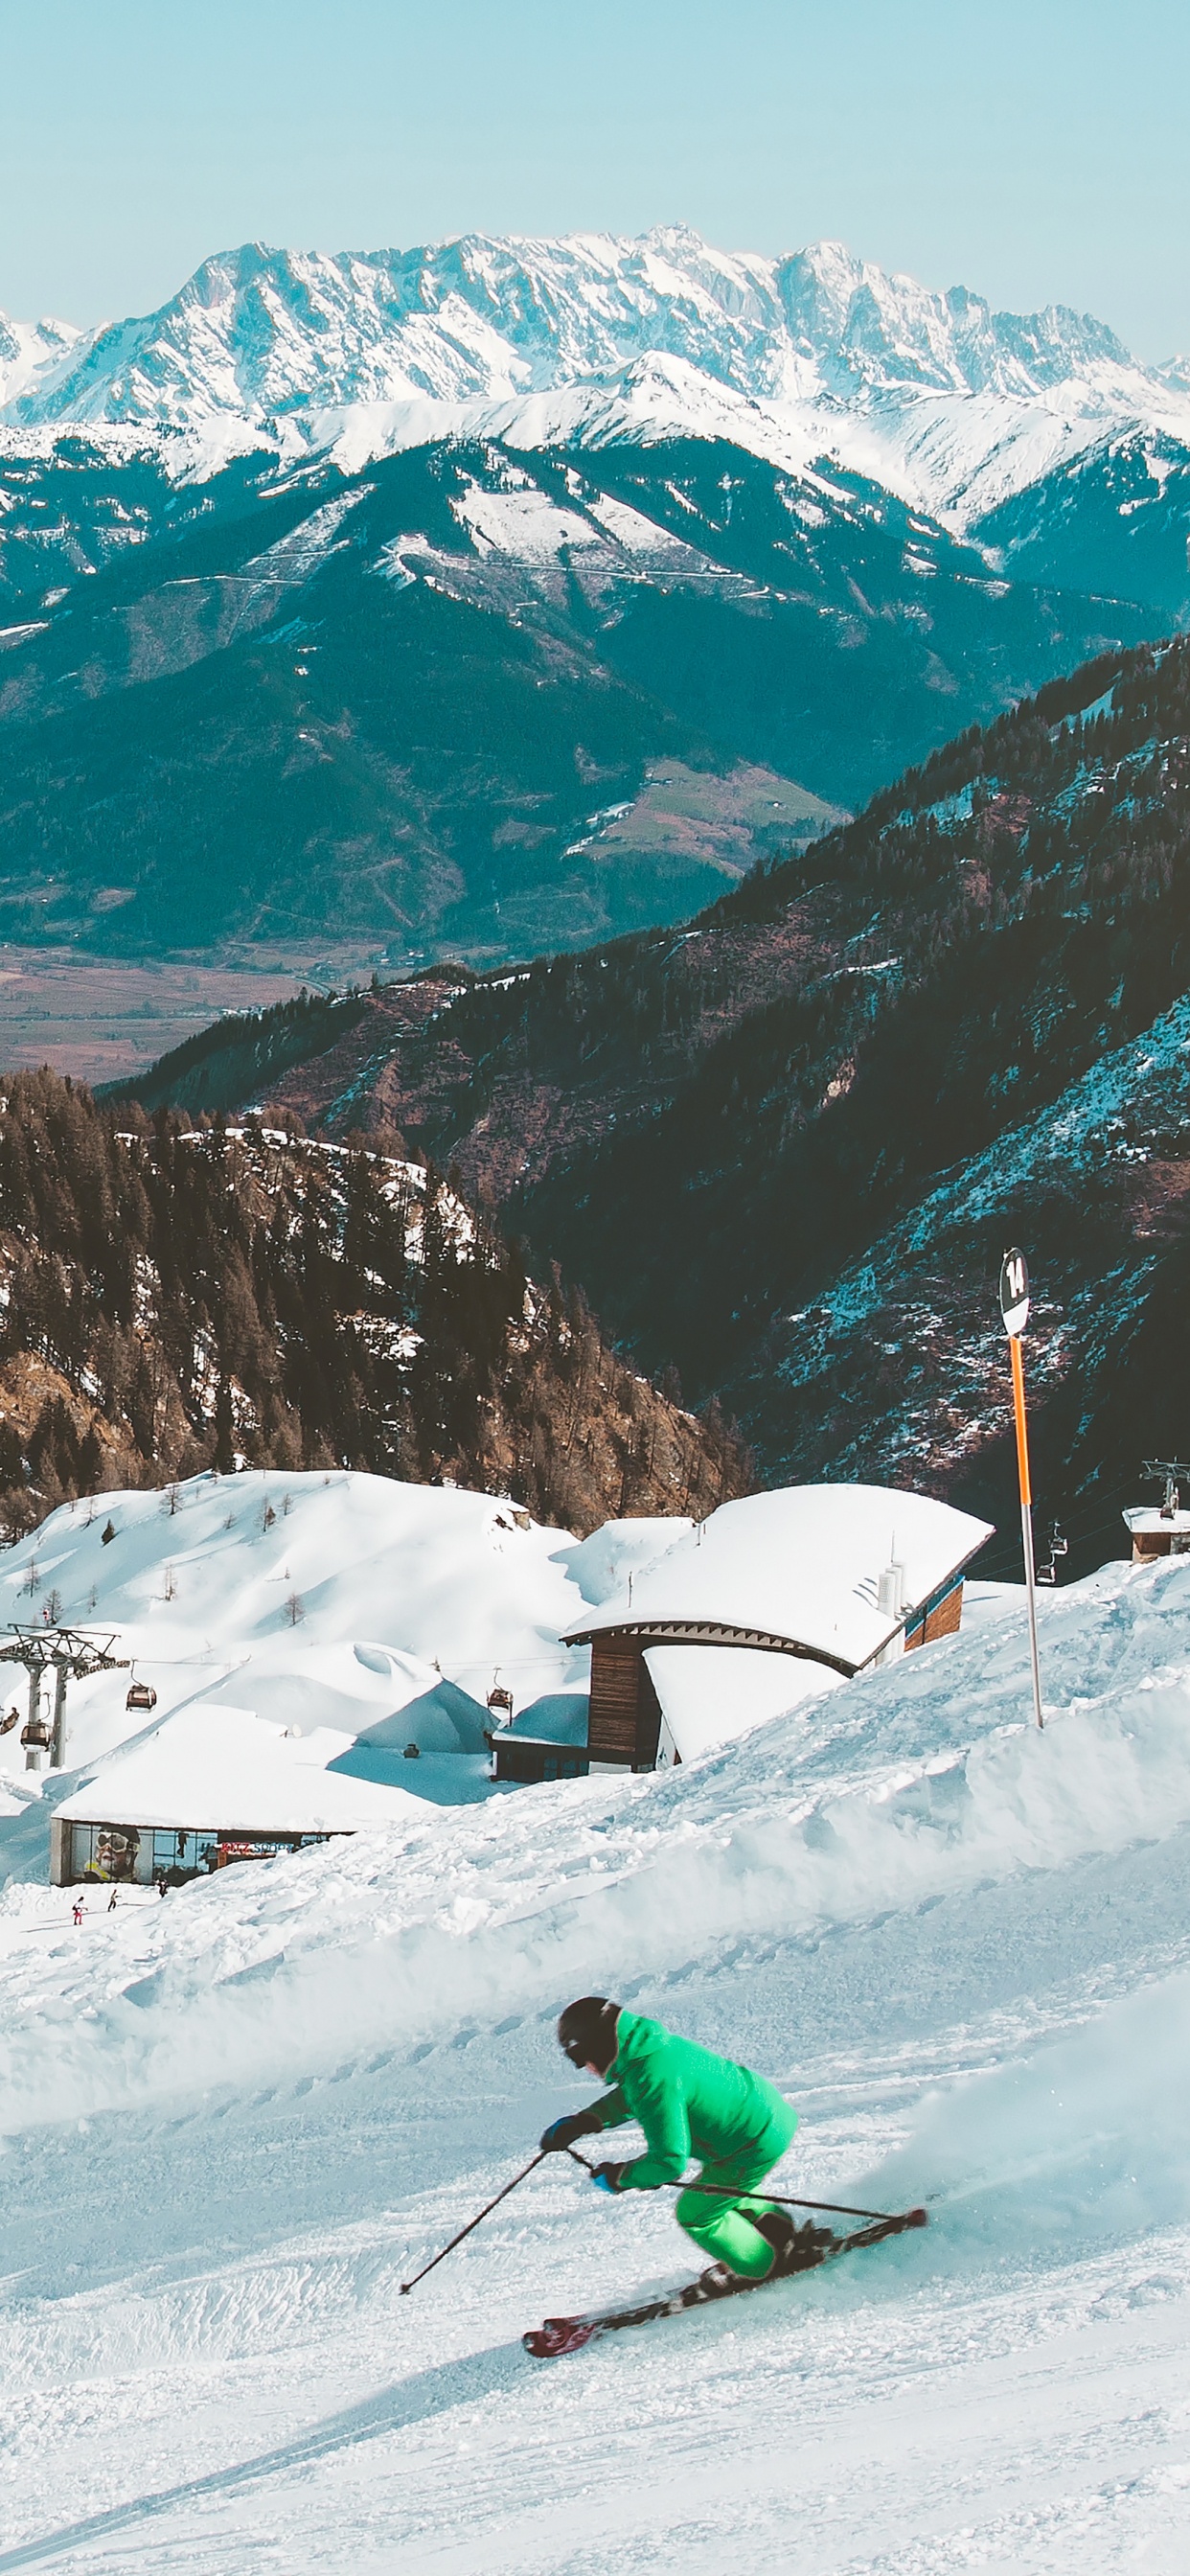 Station de Ski, Ski, Resort, Neige, Les Reliefs Montagneux. Wallpaper in 1242x2688 Resolution